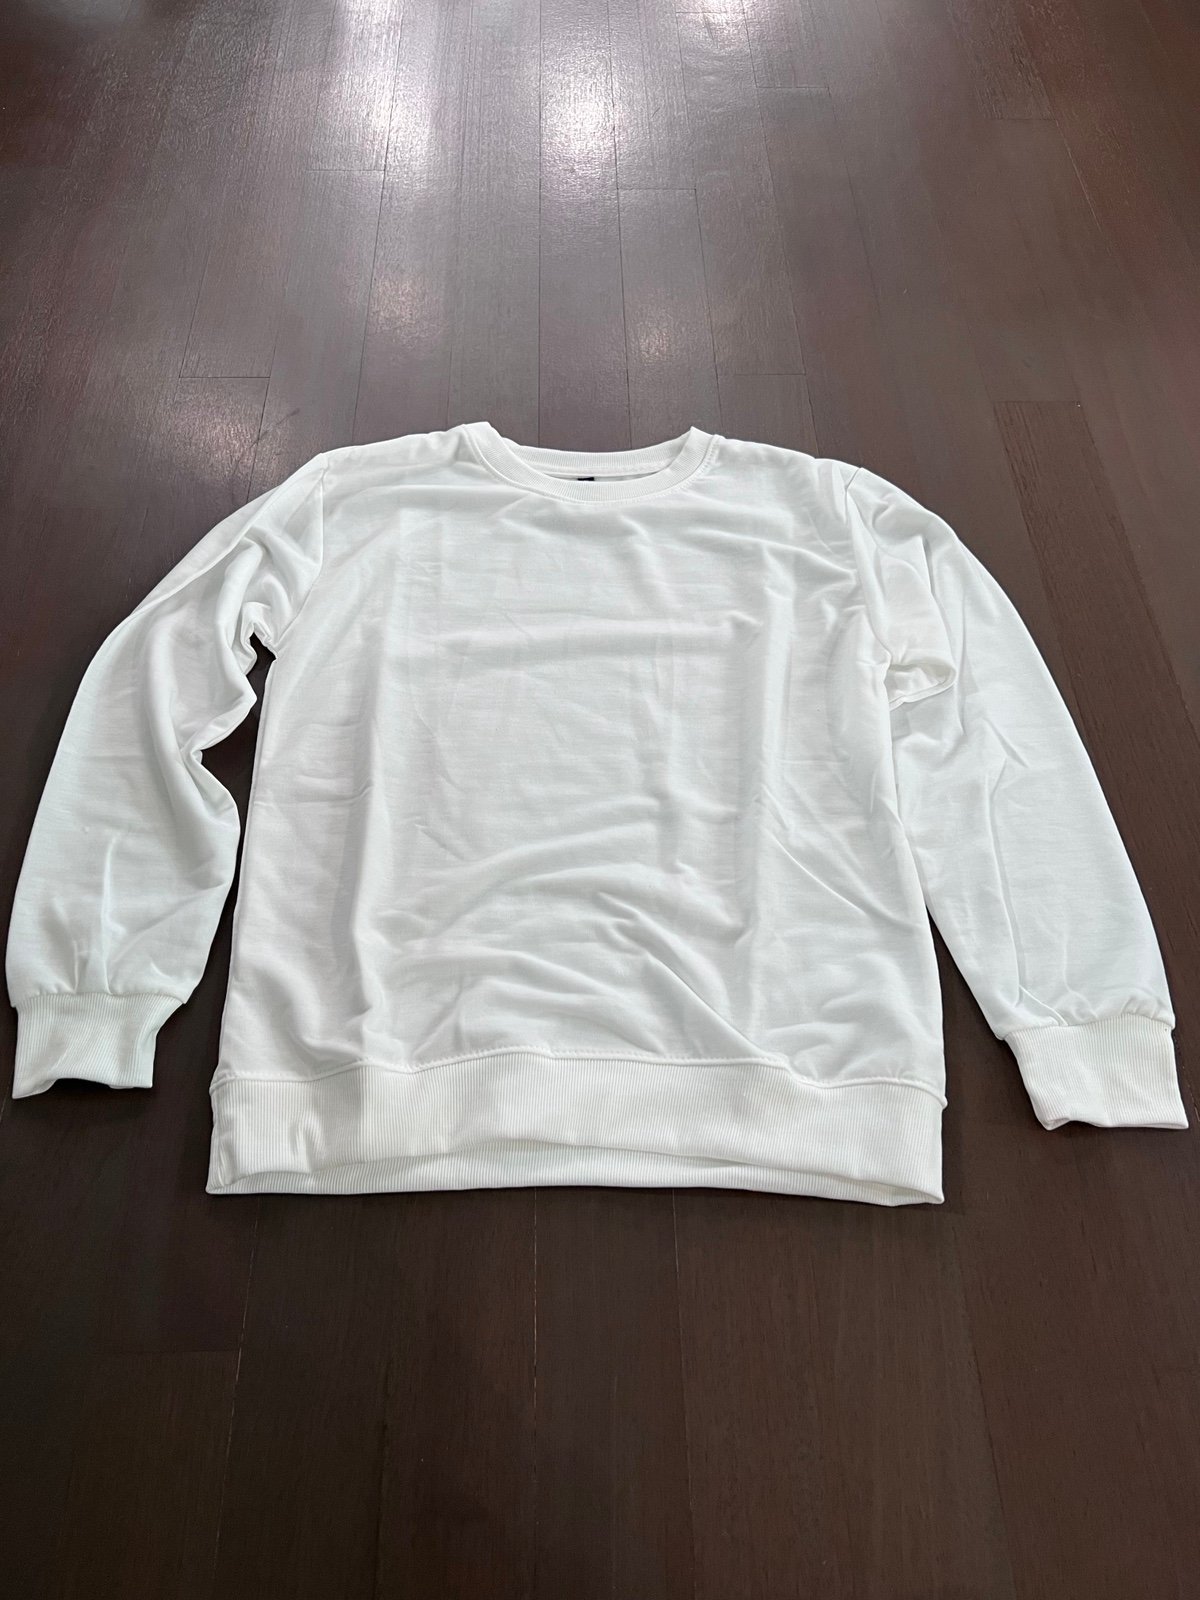 Exclusive Women´s round neck sweatshirt. Size M, but fits like S MKTjNBpyq Online Exclusive